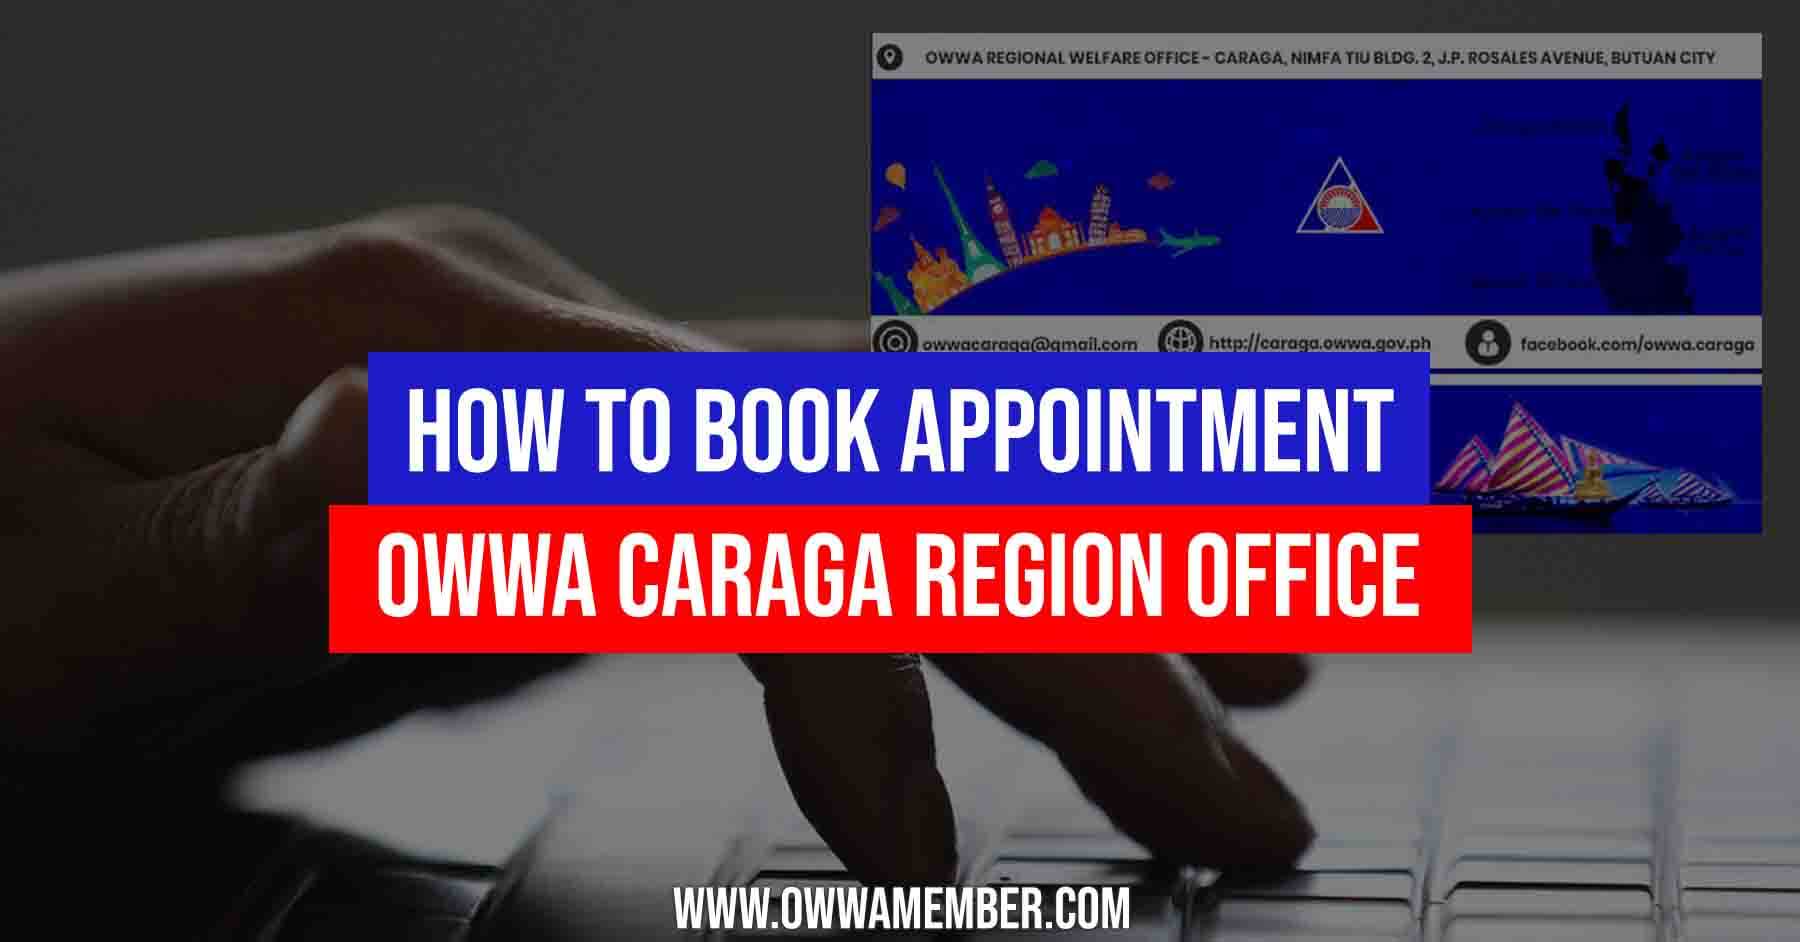 owwa caraga region office in butuan city